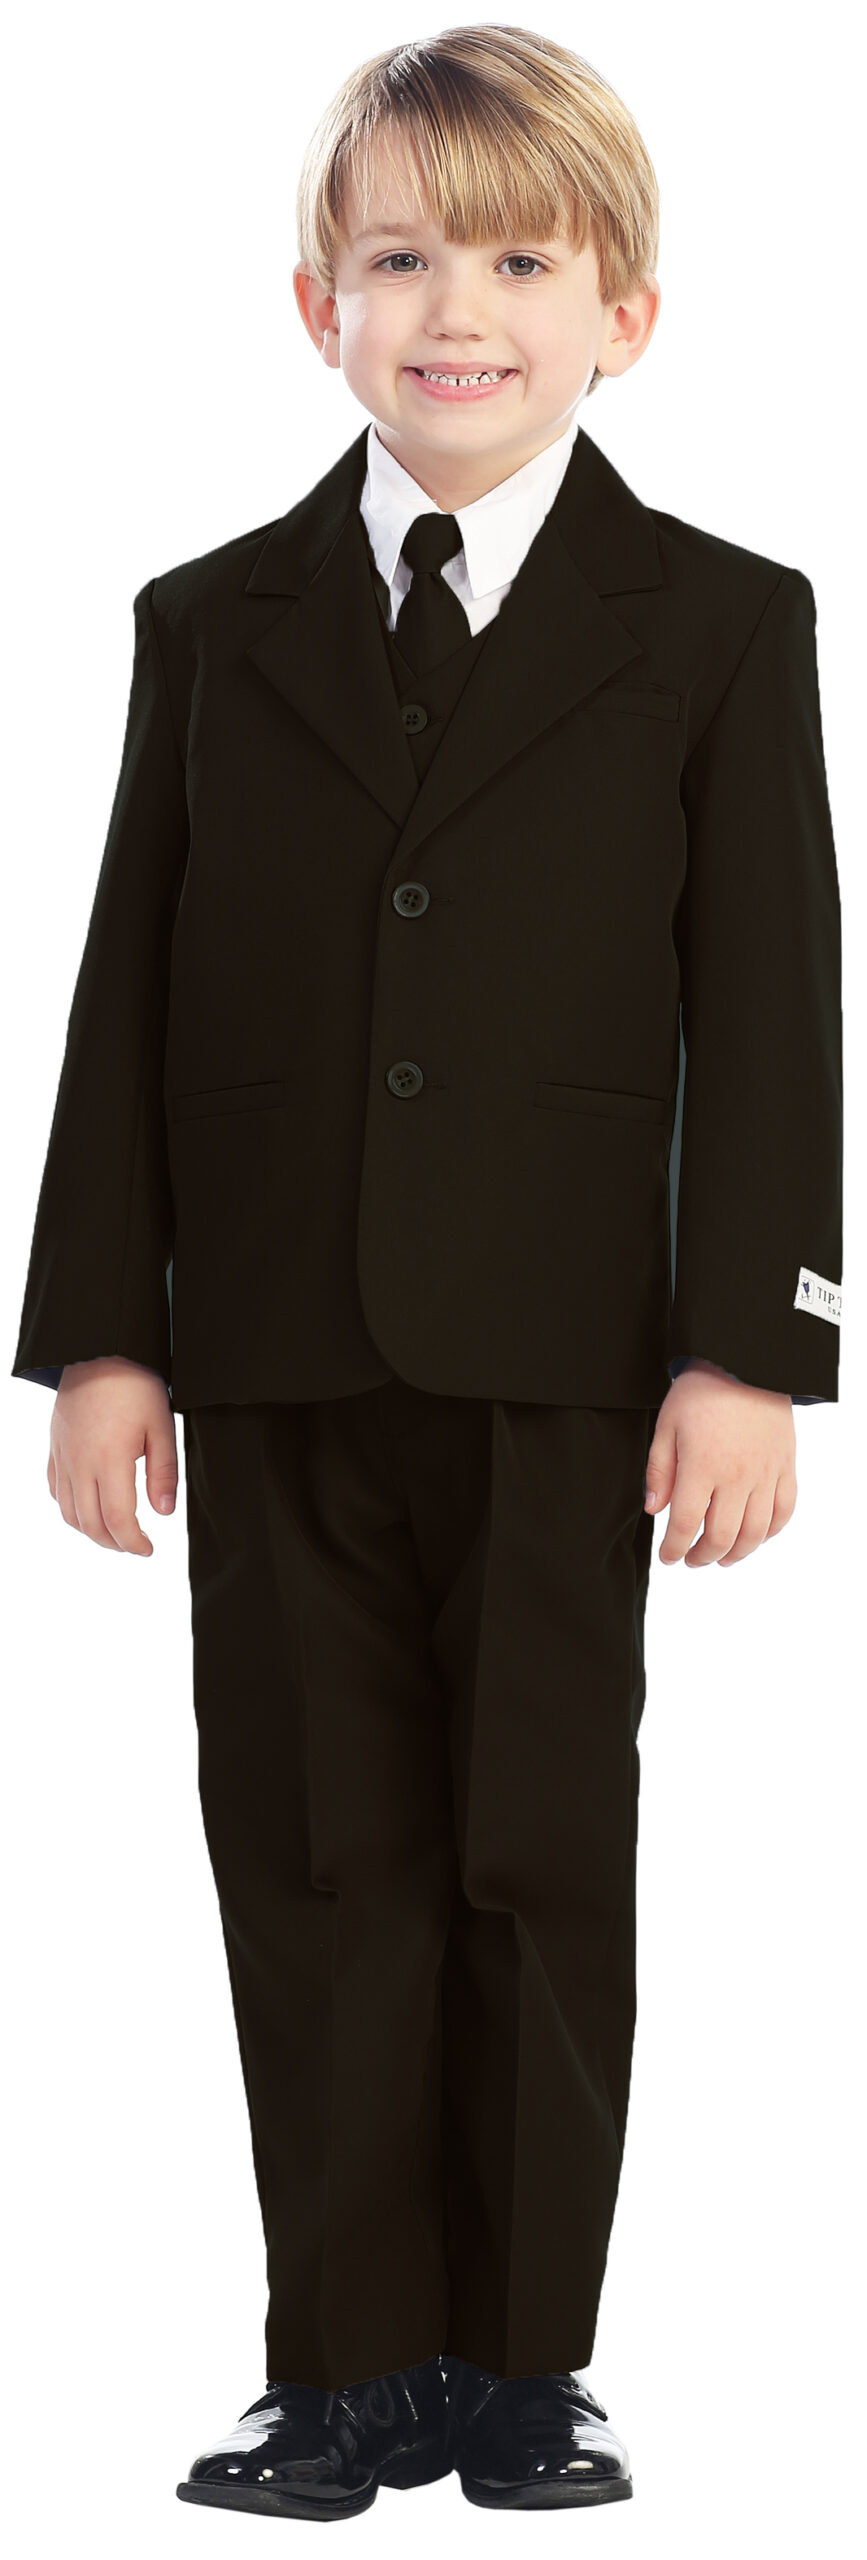 Avery Hill 5-Piece Boy's 2-Button Dress Suit Full-Back Vest - Brown Size 5